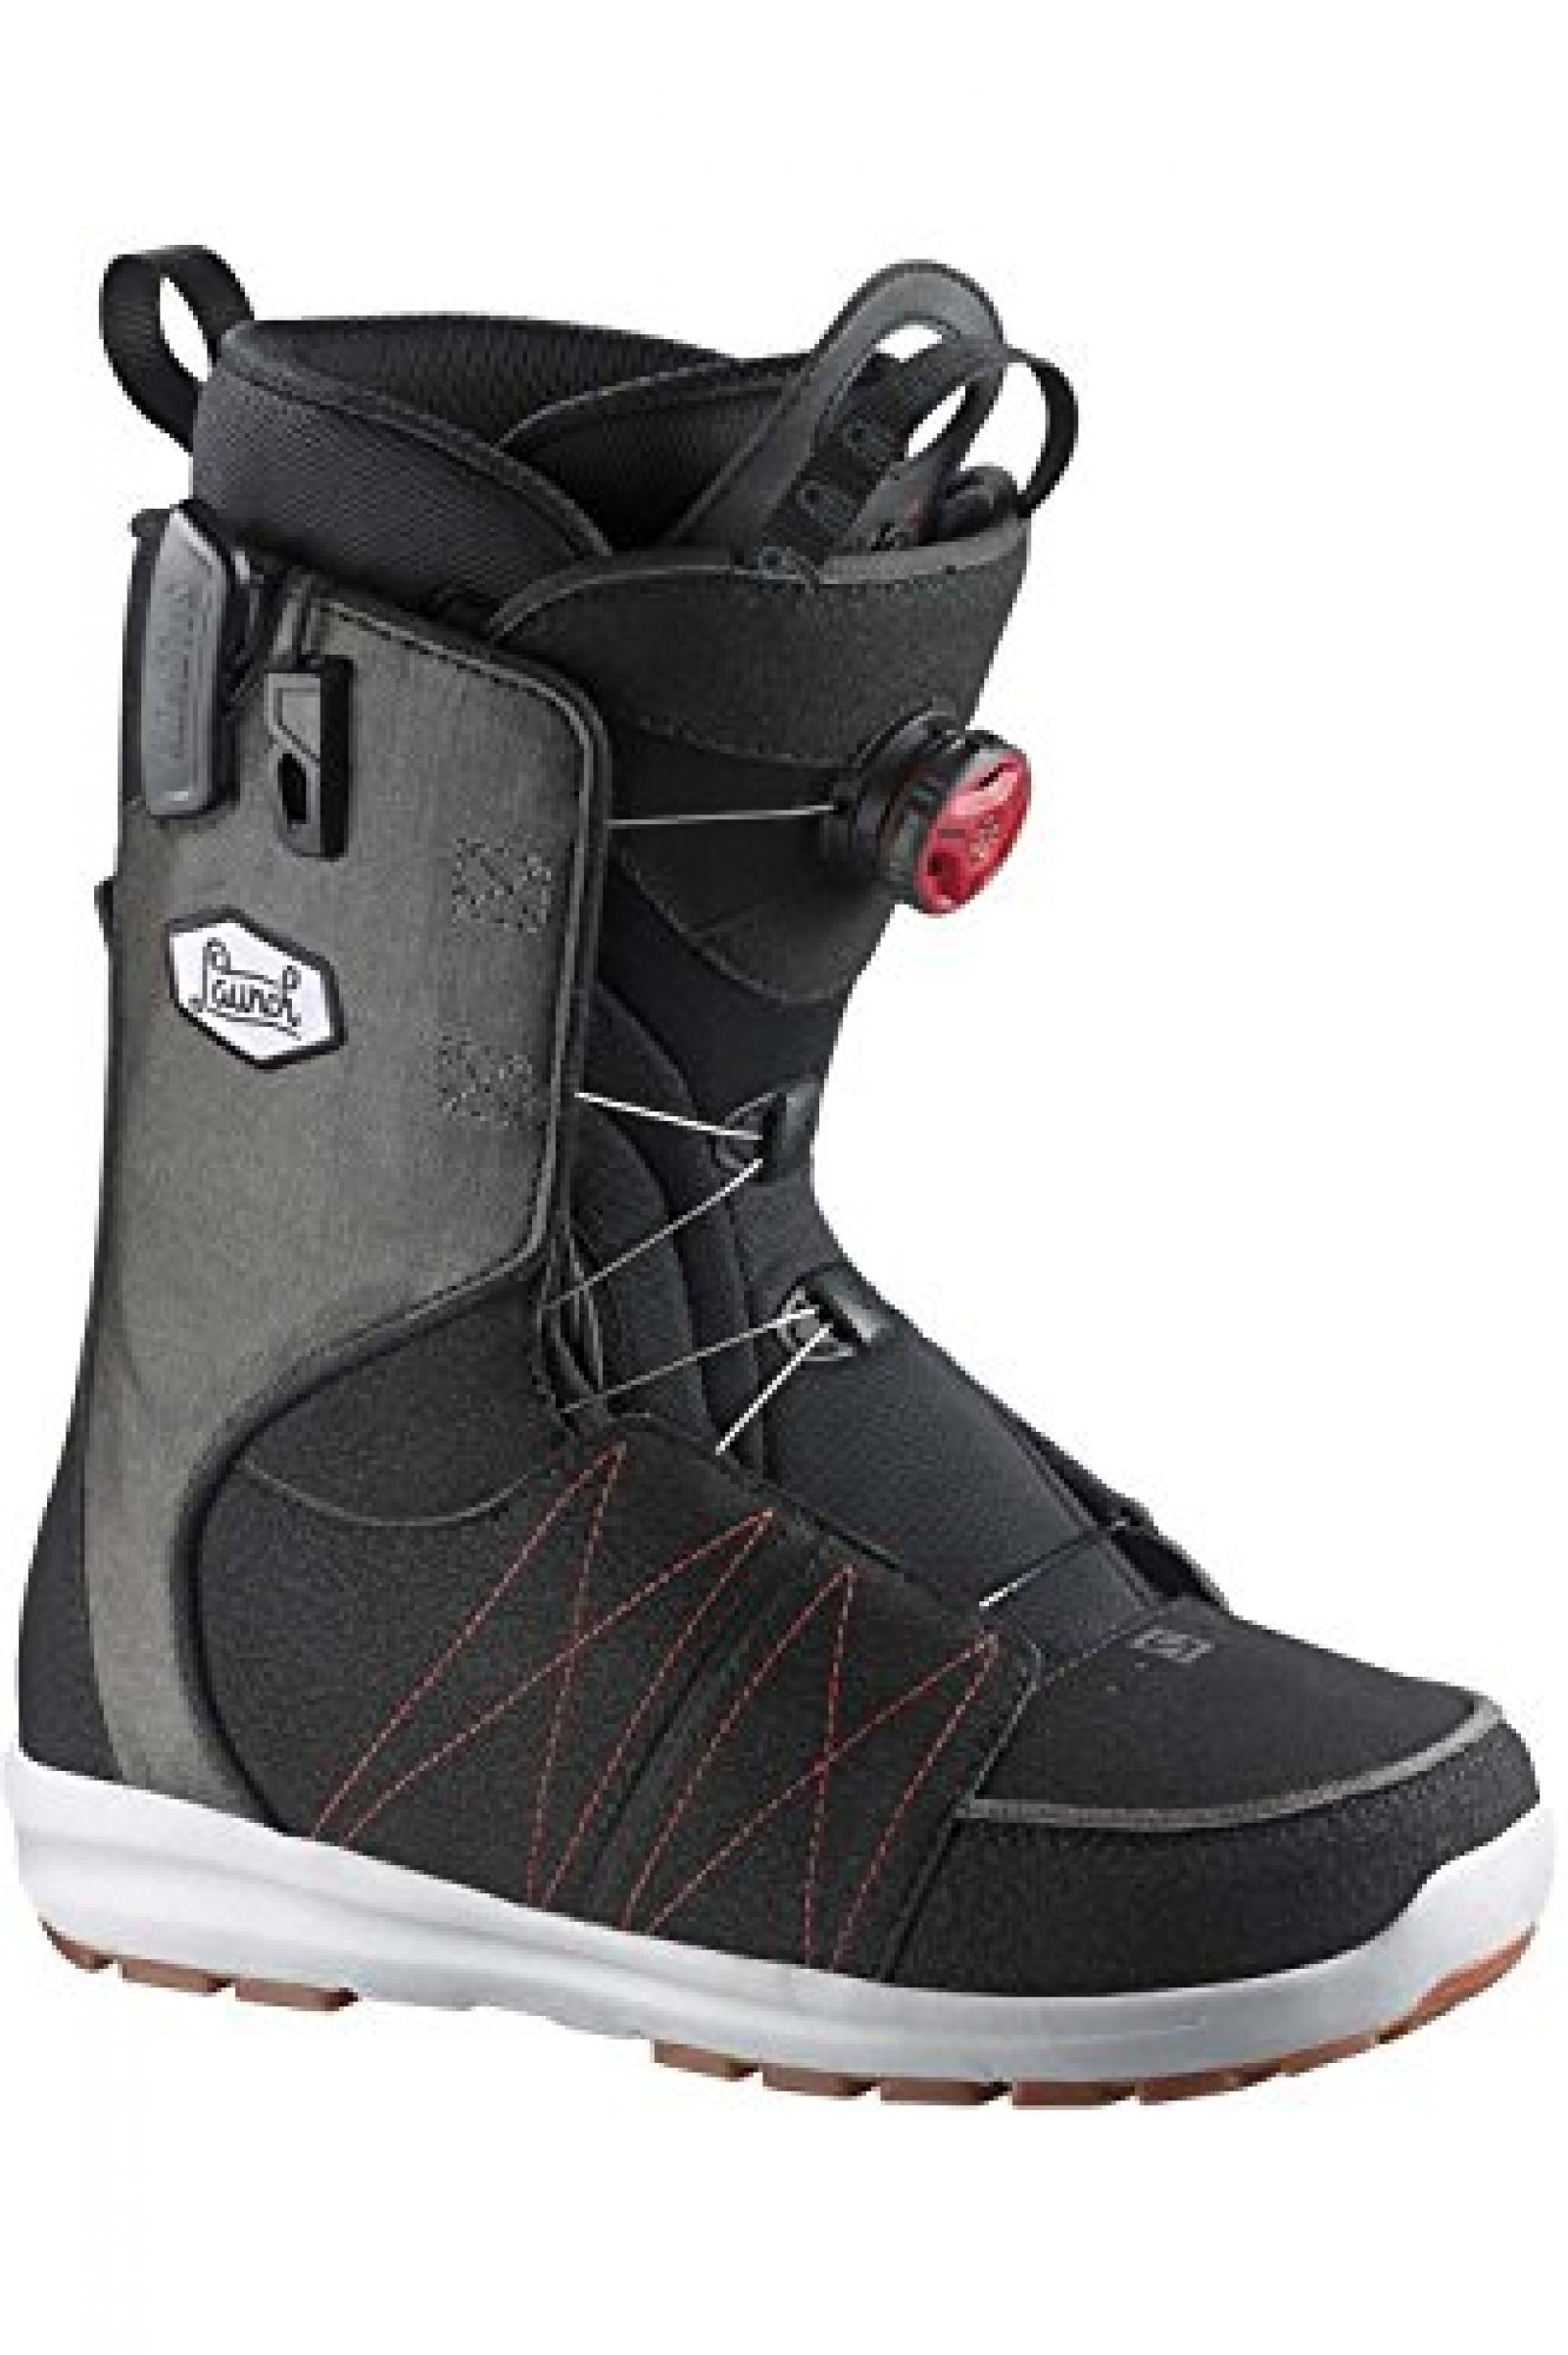 Salomon Launch Boa Str8jkt Snowboard Boots - Black/Racing Red/Black 